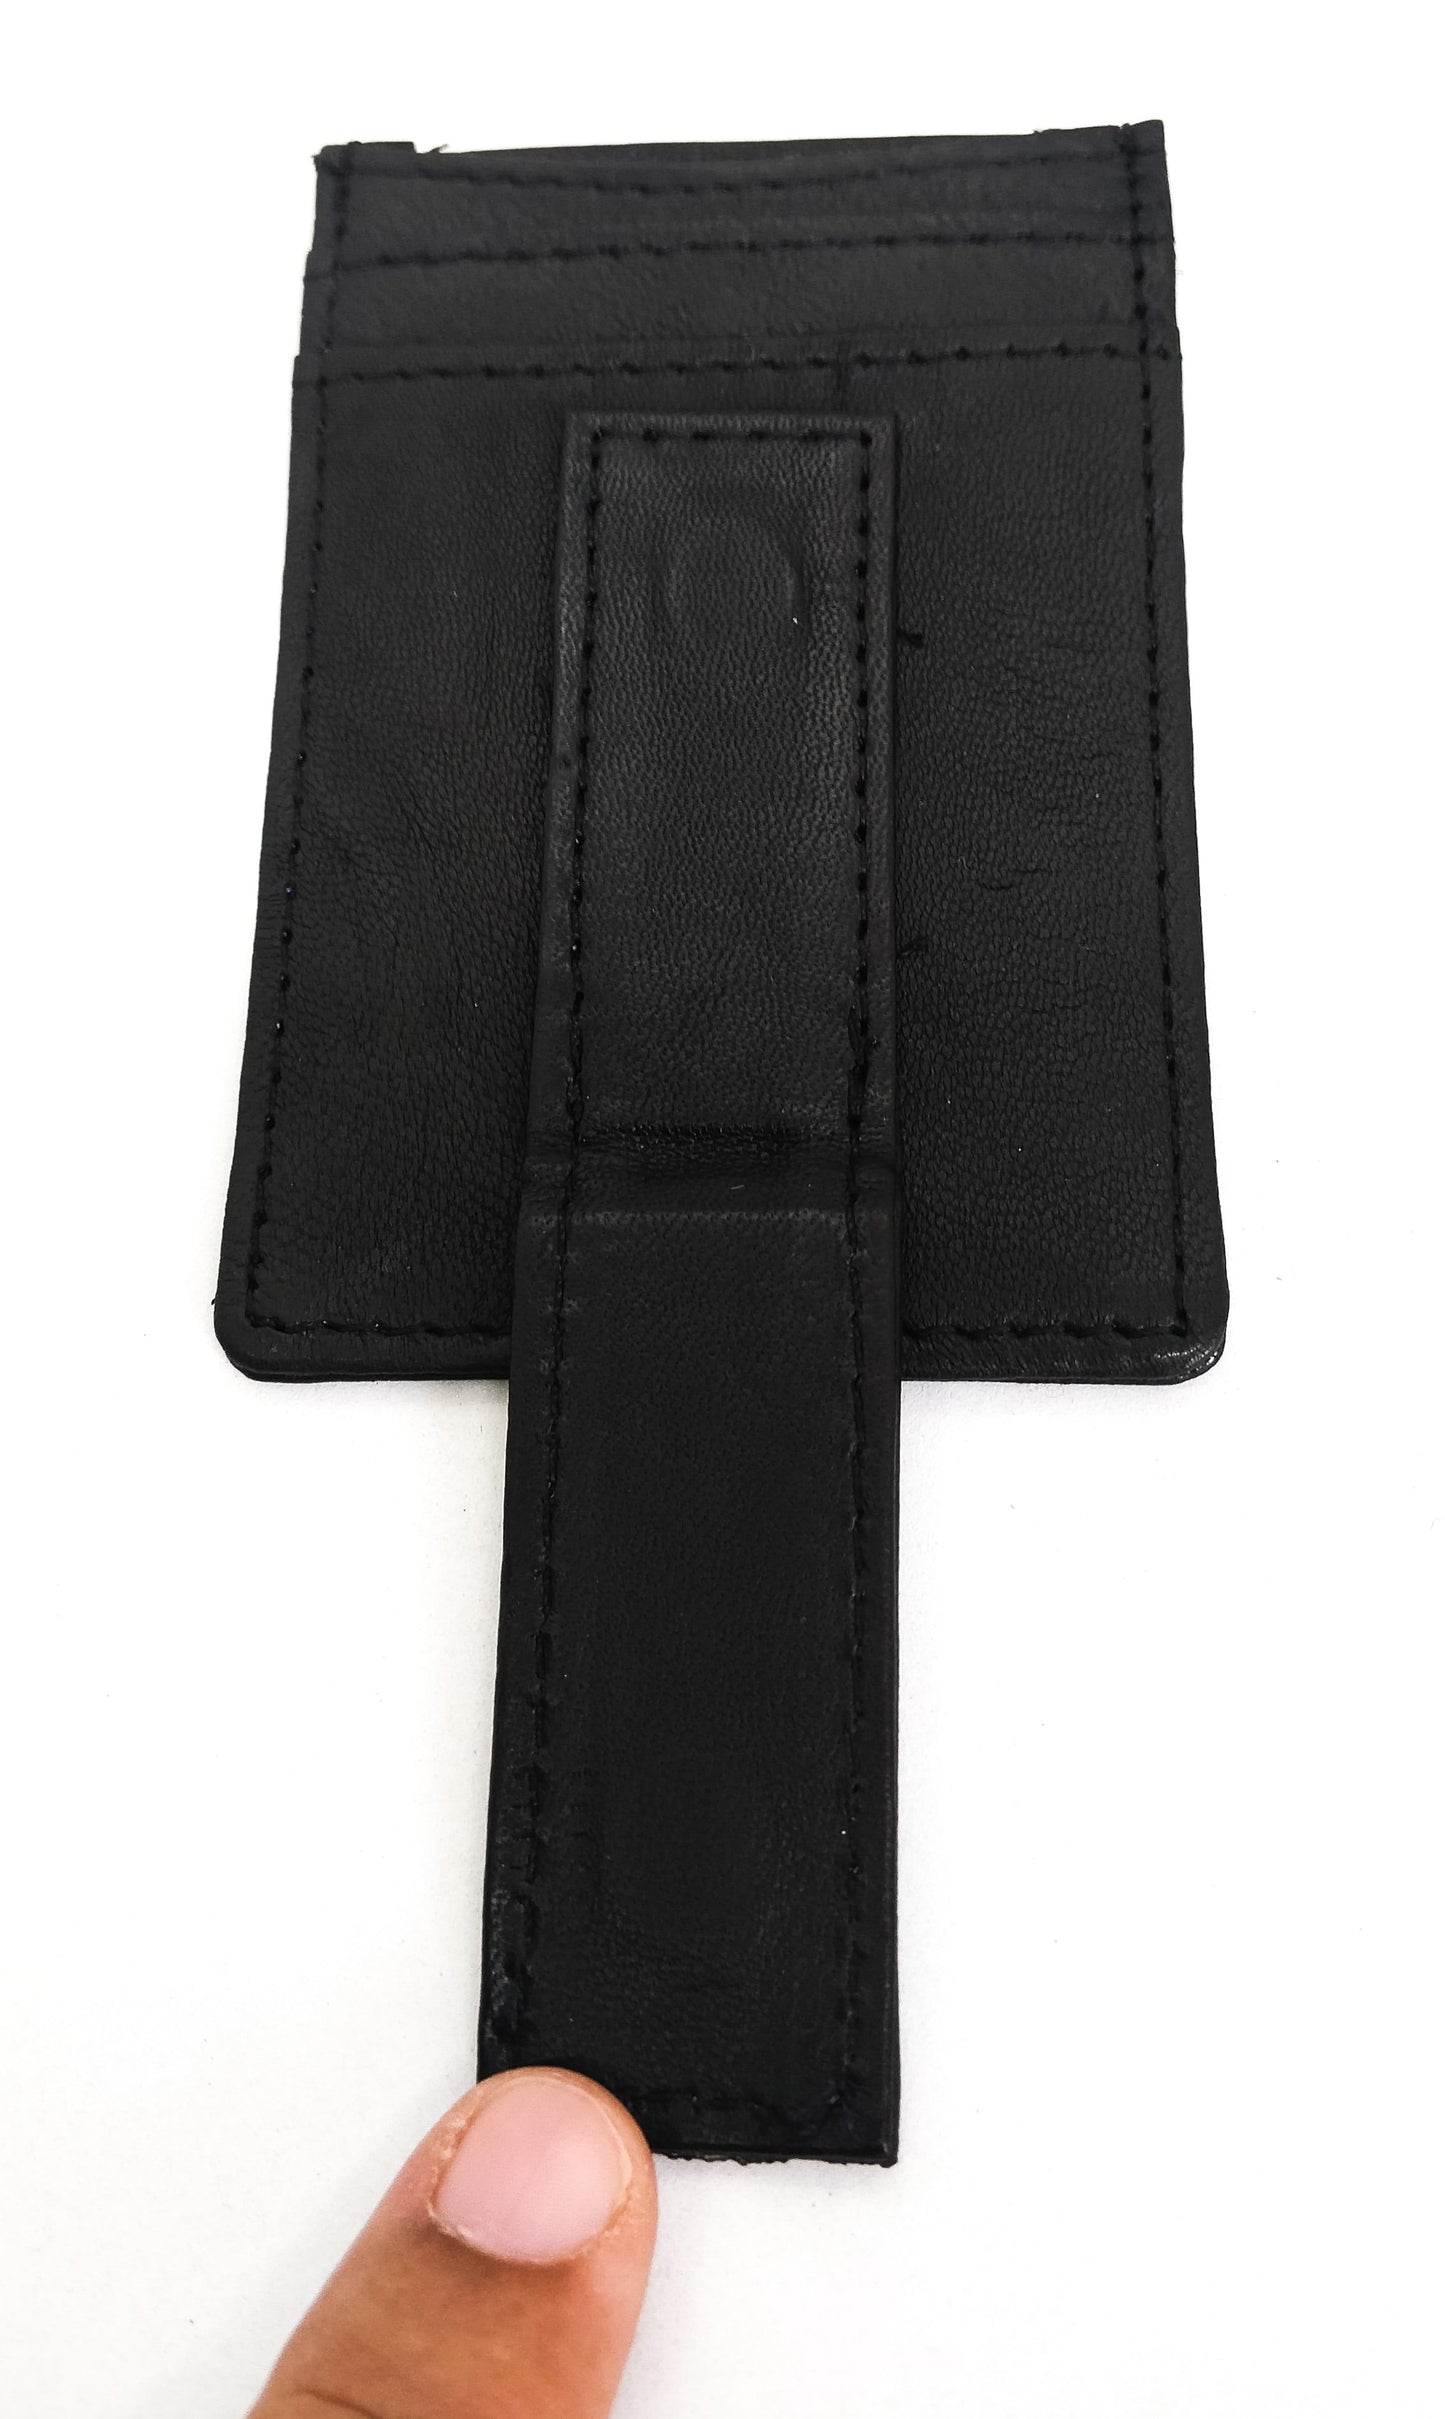 Genuine Leather Black Money Clip